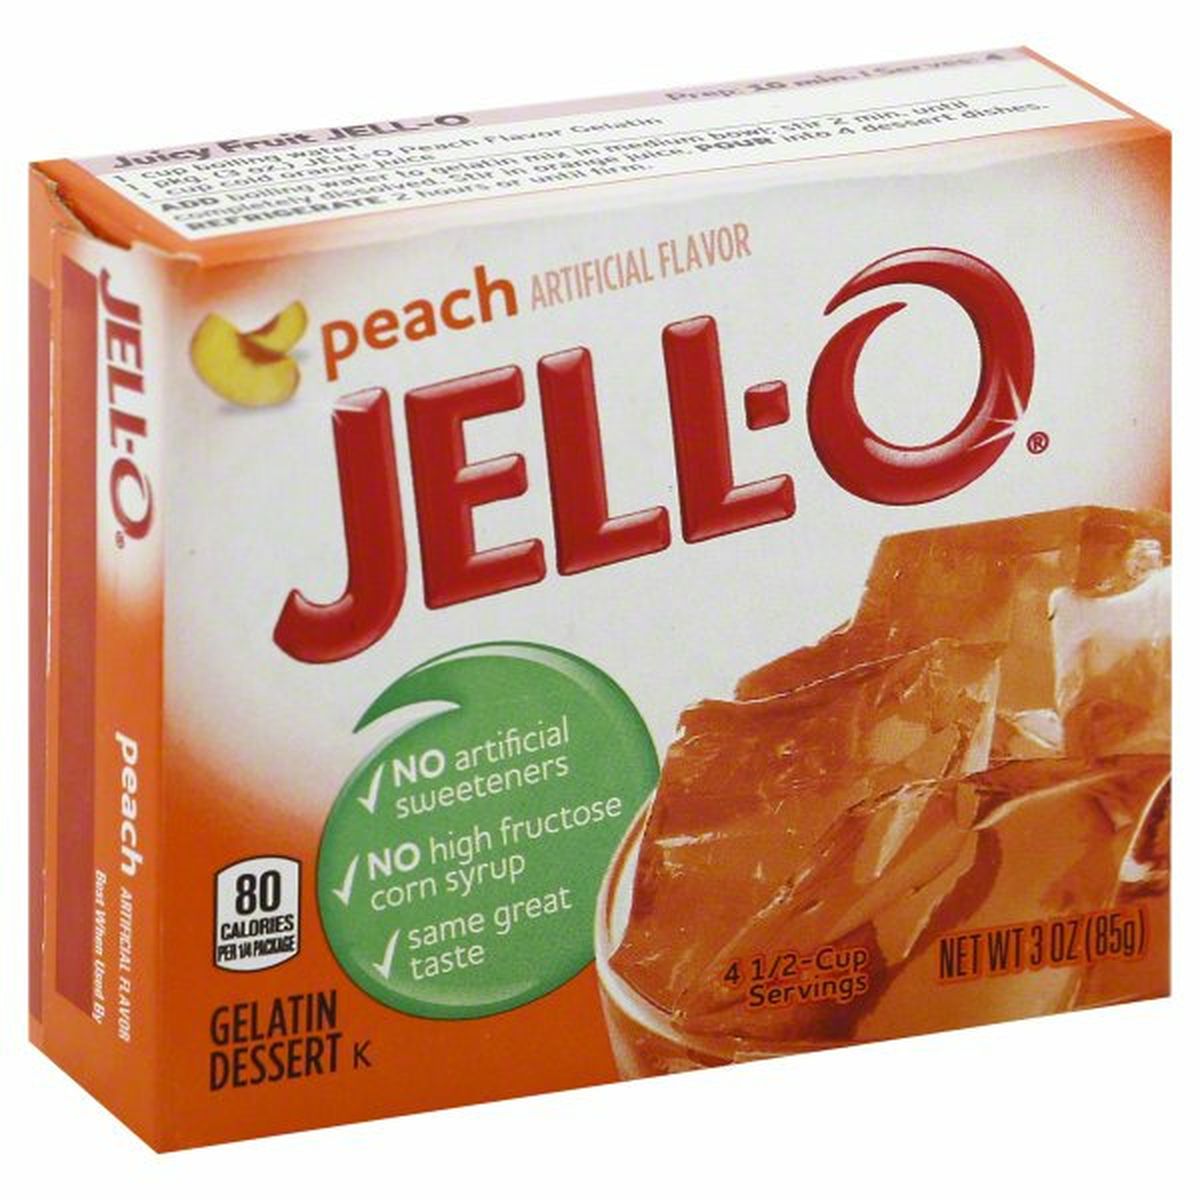 Calories in Jell-O Gelatin Dessert, Peach